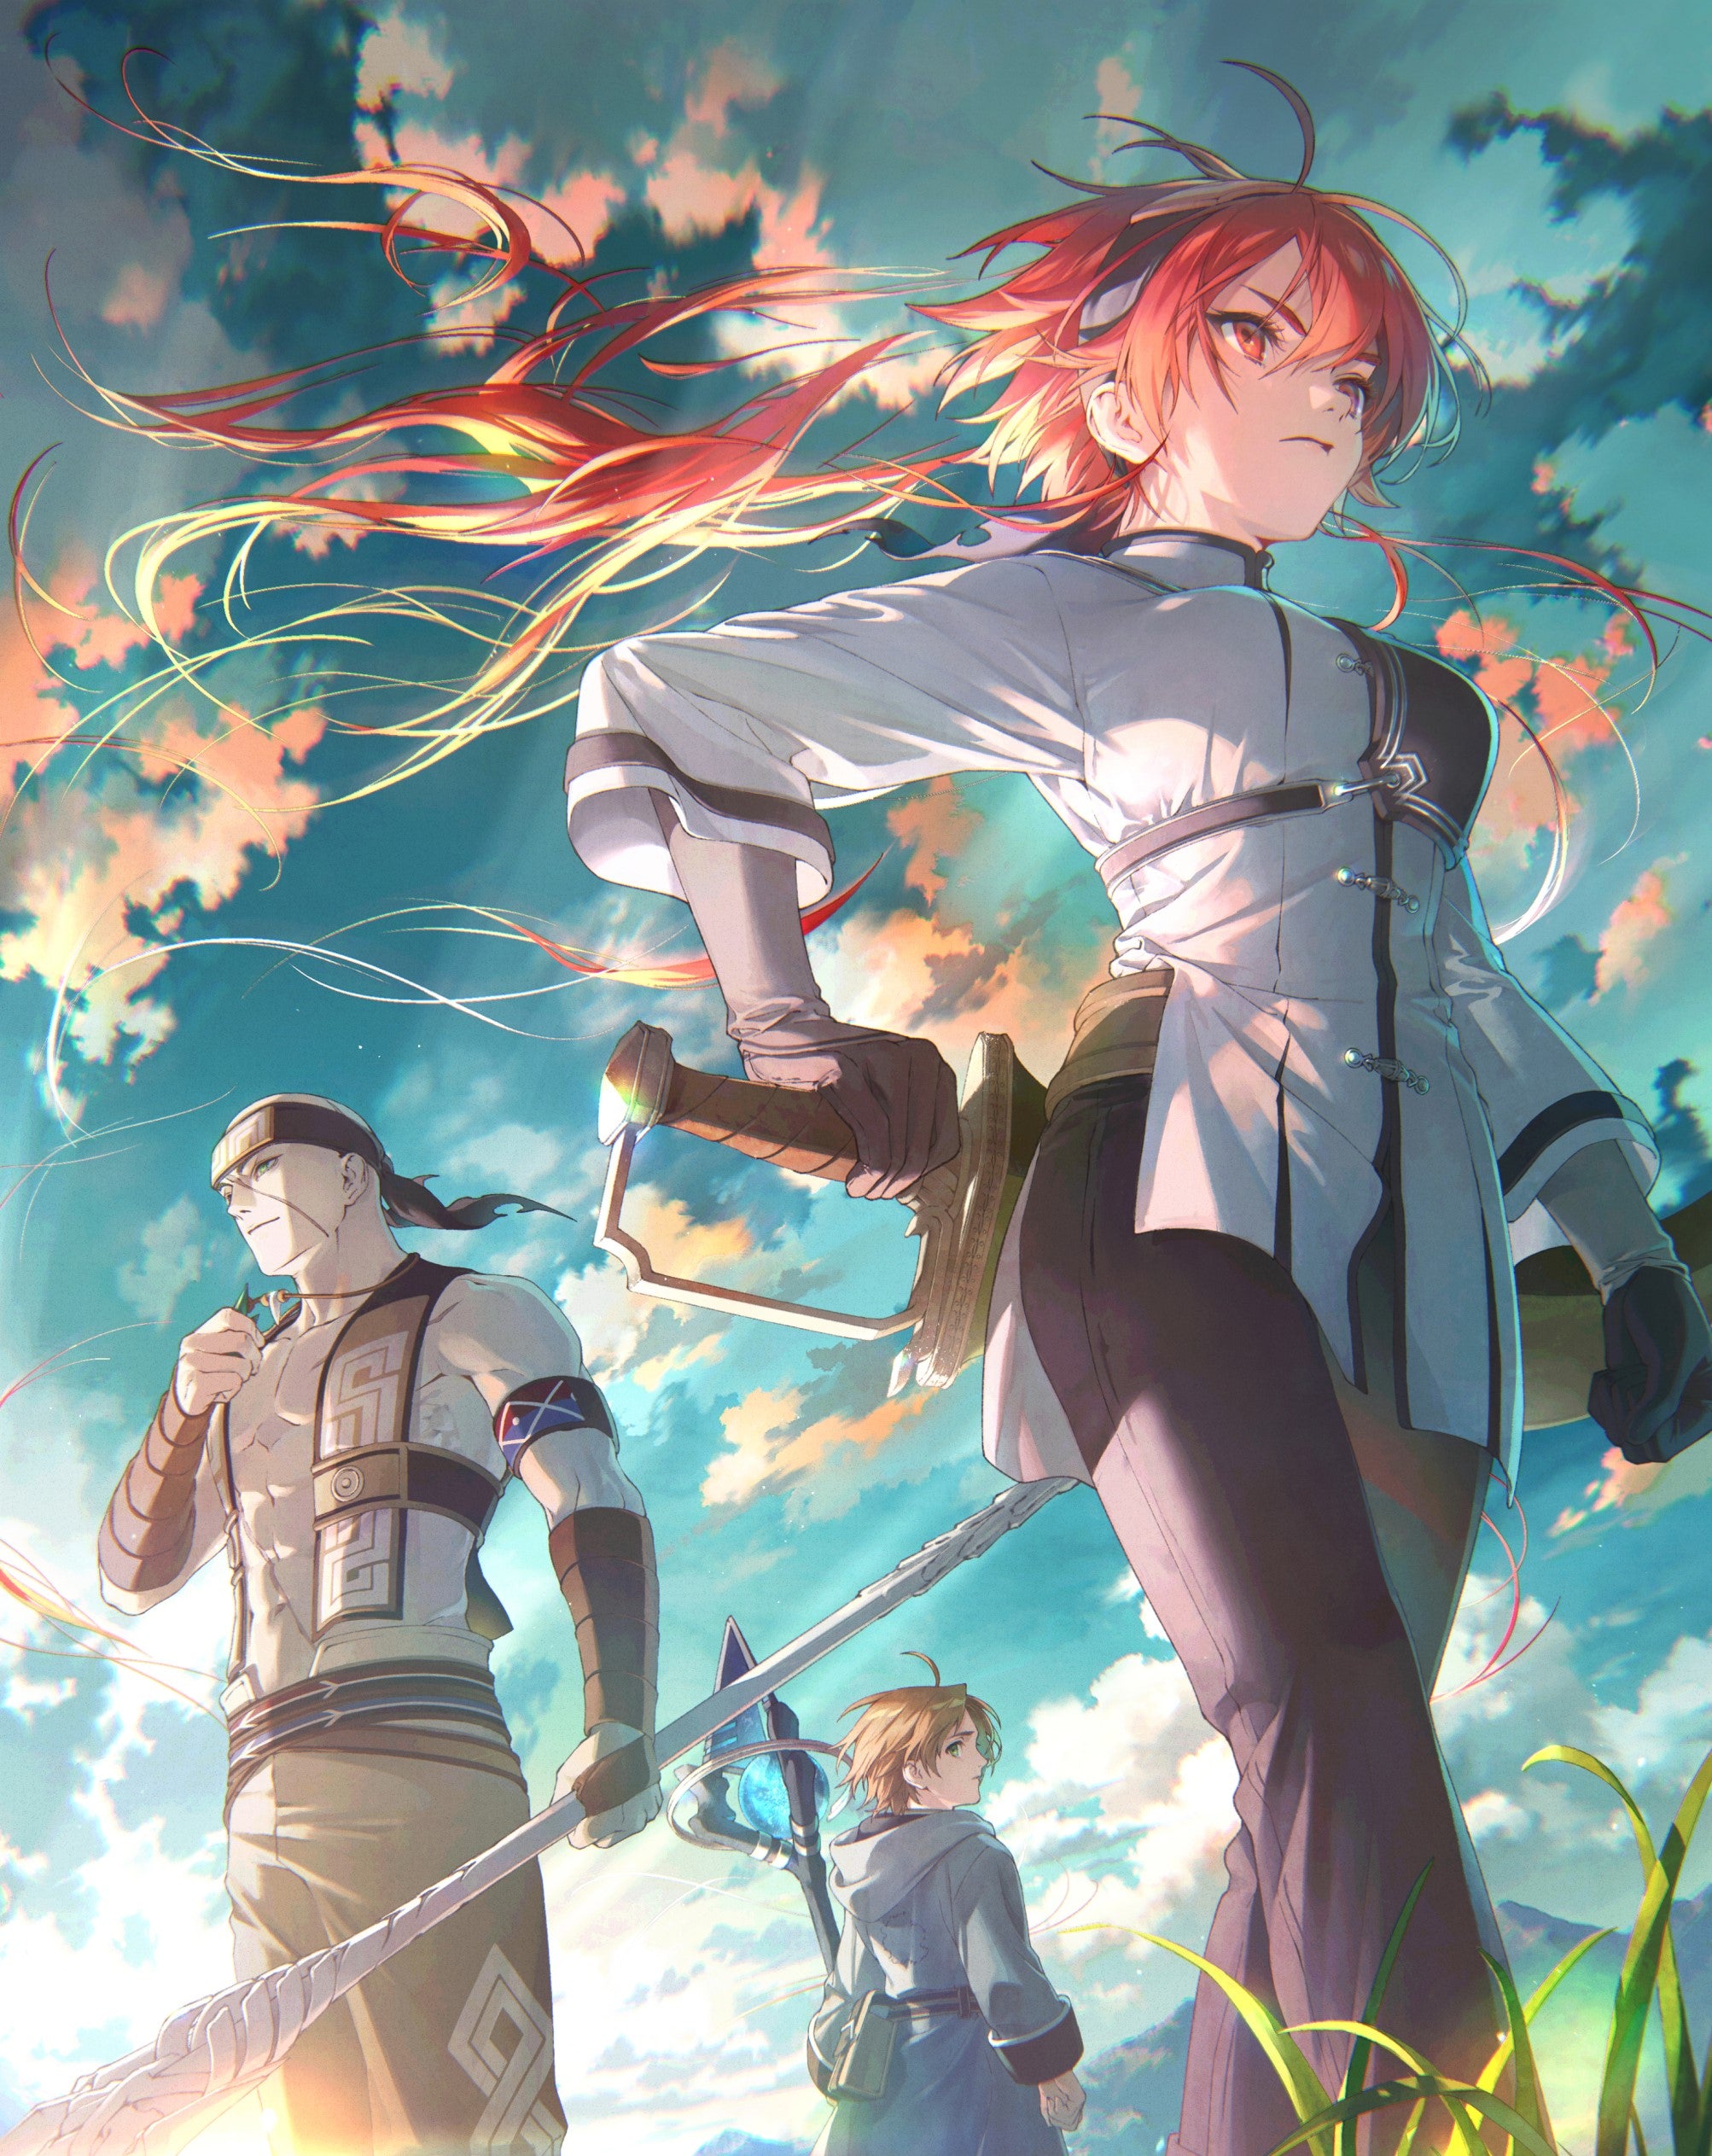 Mushoku Tensei Light Novel Officially Ends With Volume 26 – Yūjin